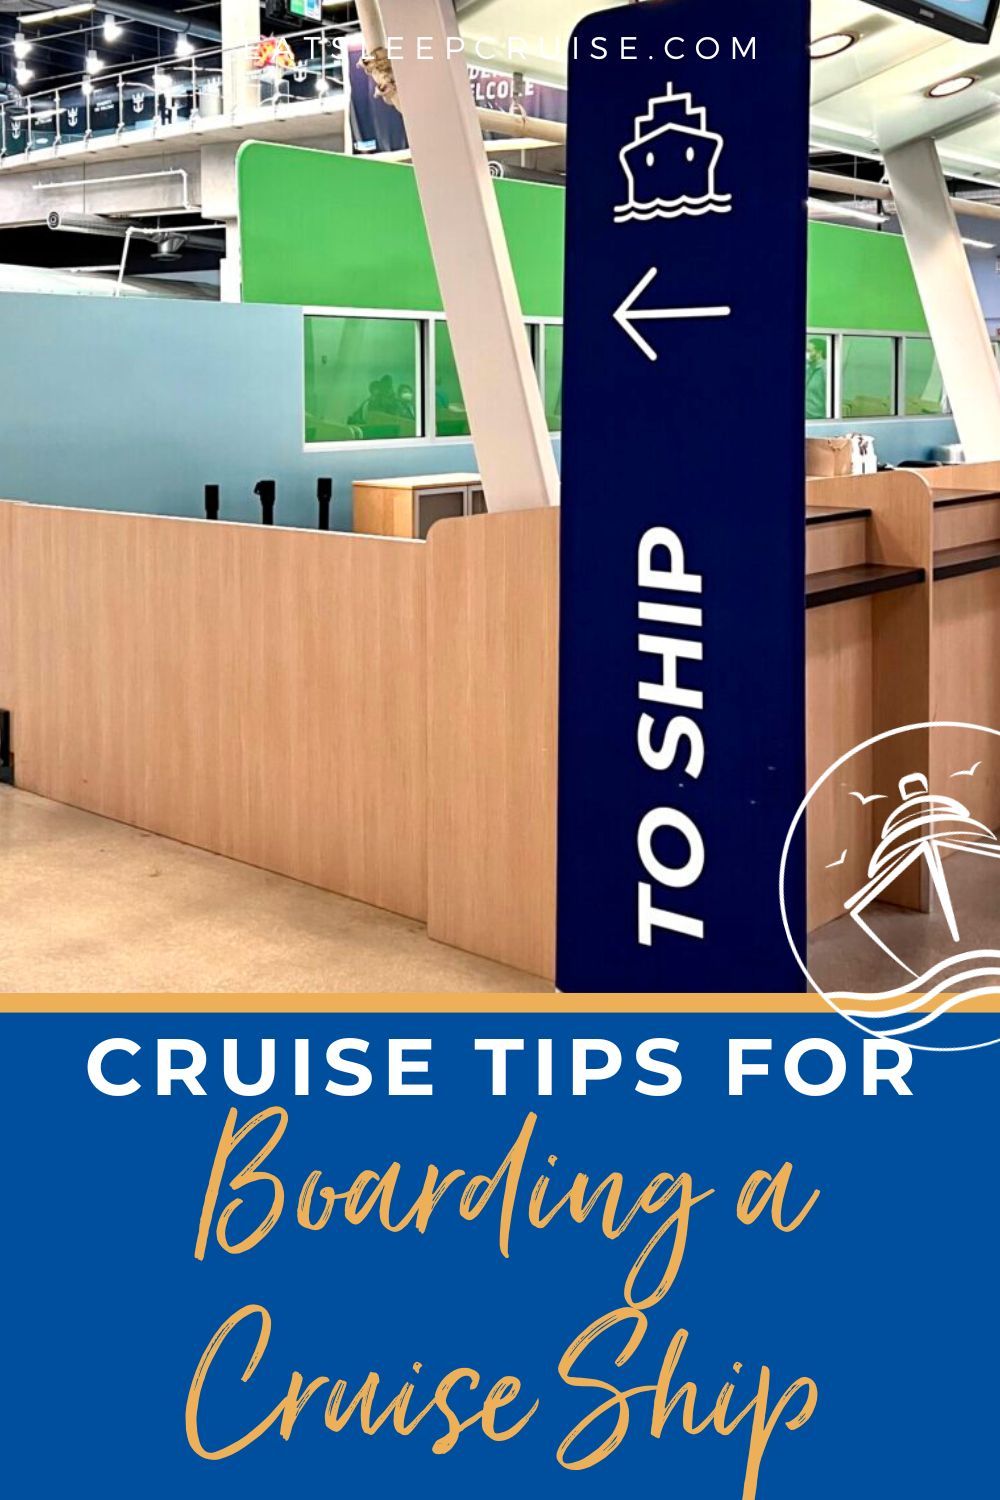 Tips for Boarding a Cruise Ship